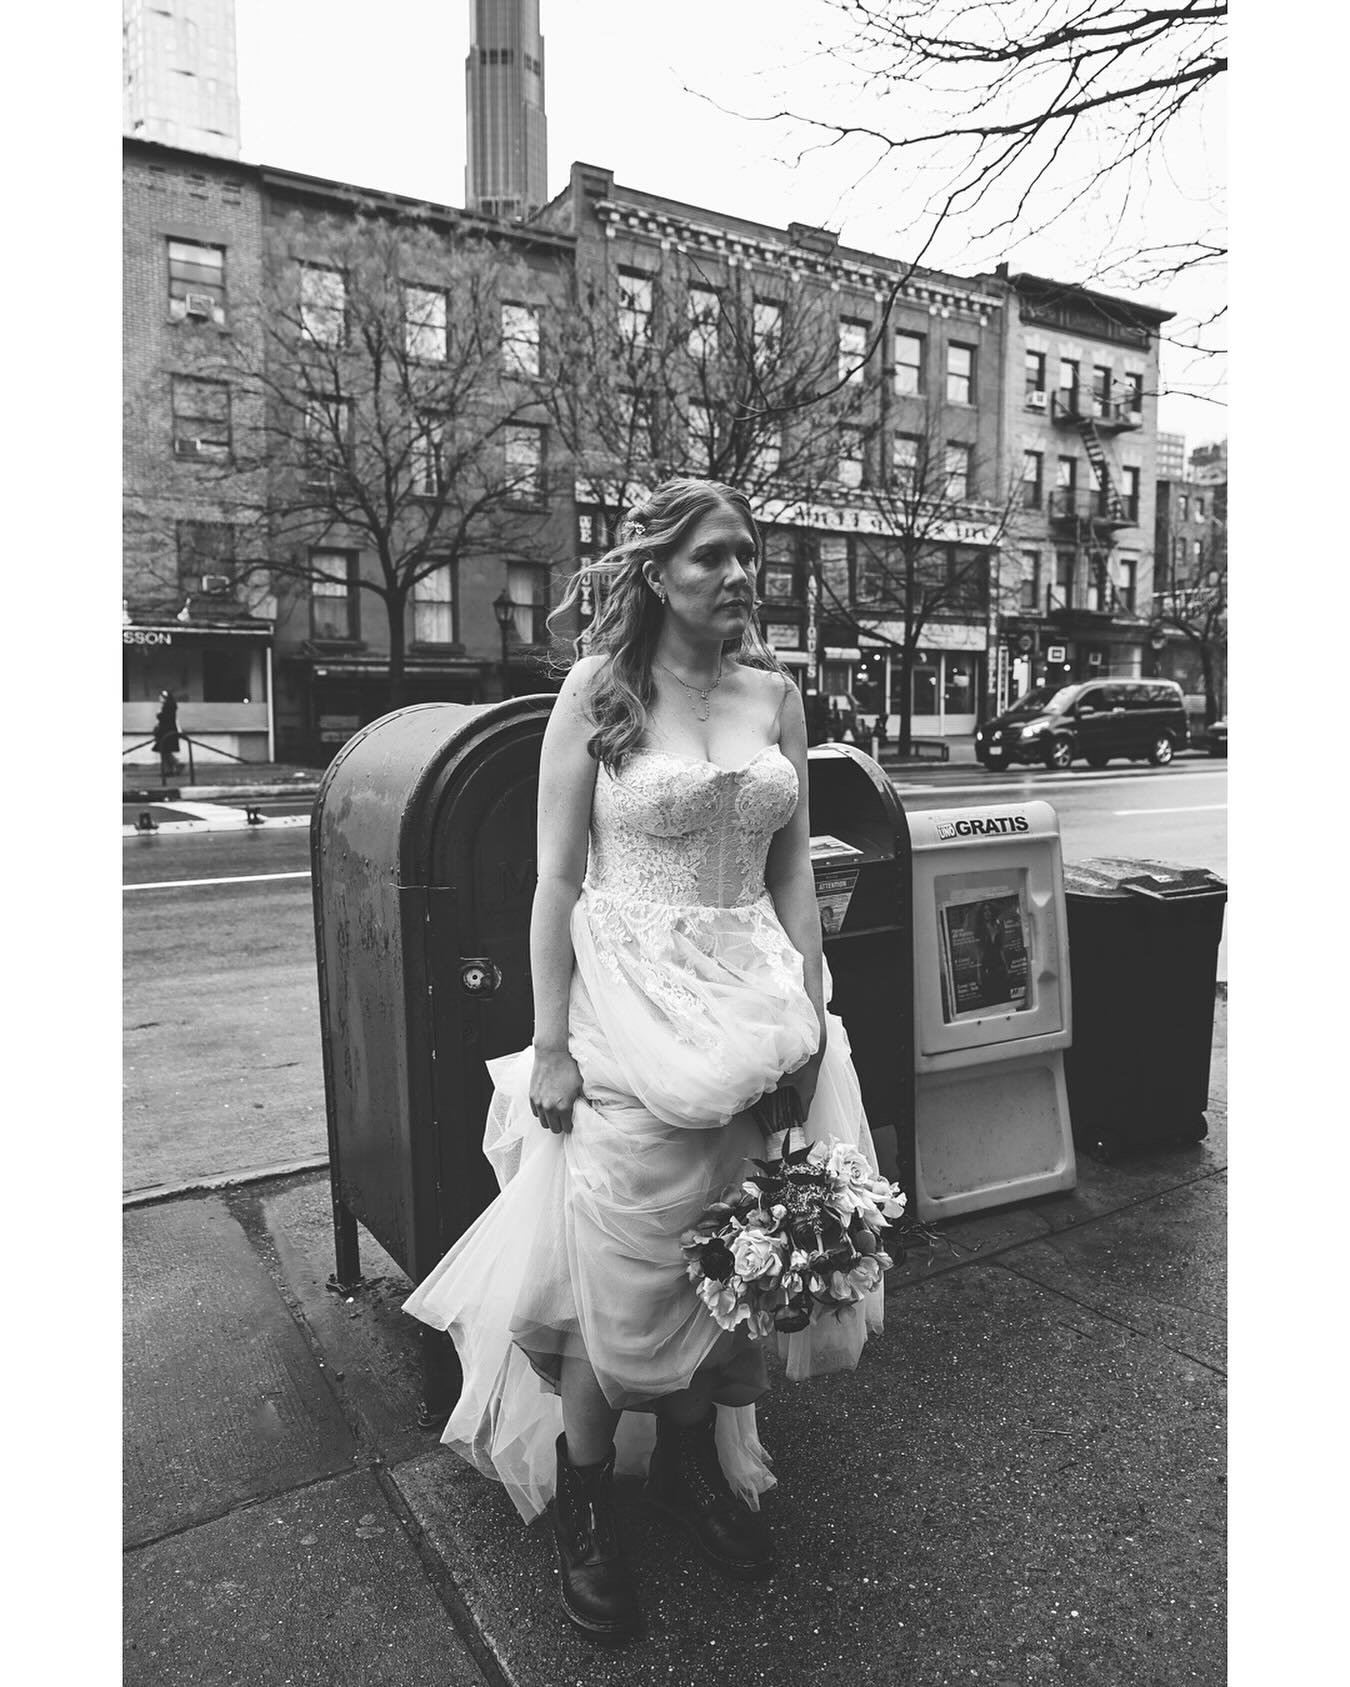 Untitled 
.
.
.
.
#robertcarlonewyork #nyc #nycbride #nycwedding #nycweddingphotographer #nycweddingphotography #weddingdress #flowers #rain #blackandwhite #love #heart #docmartens #brooklynbride #cheers